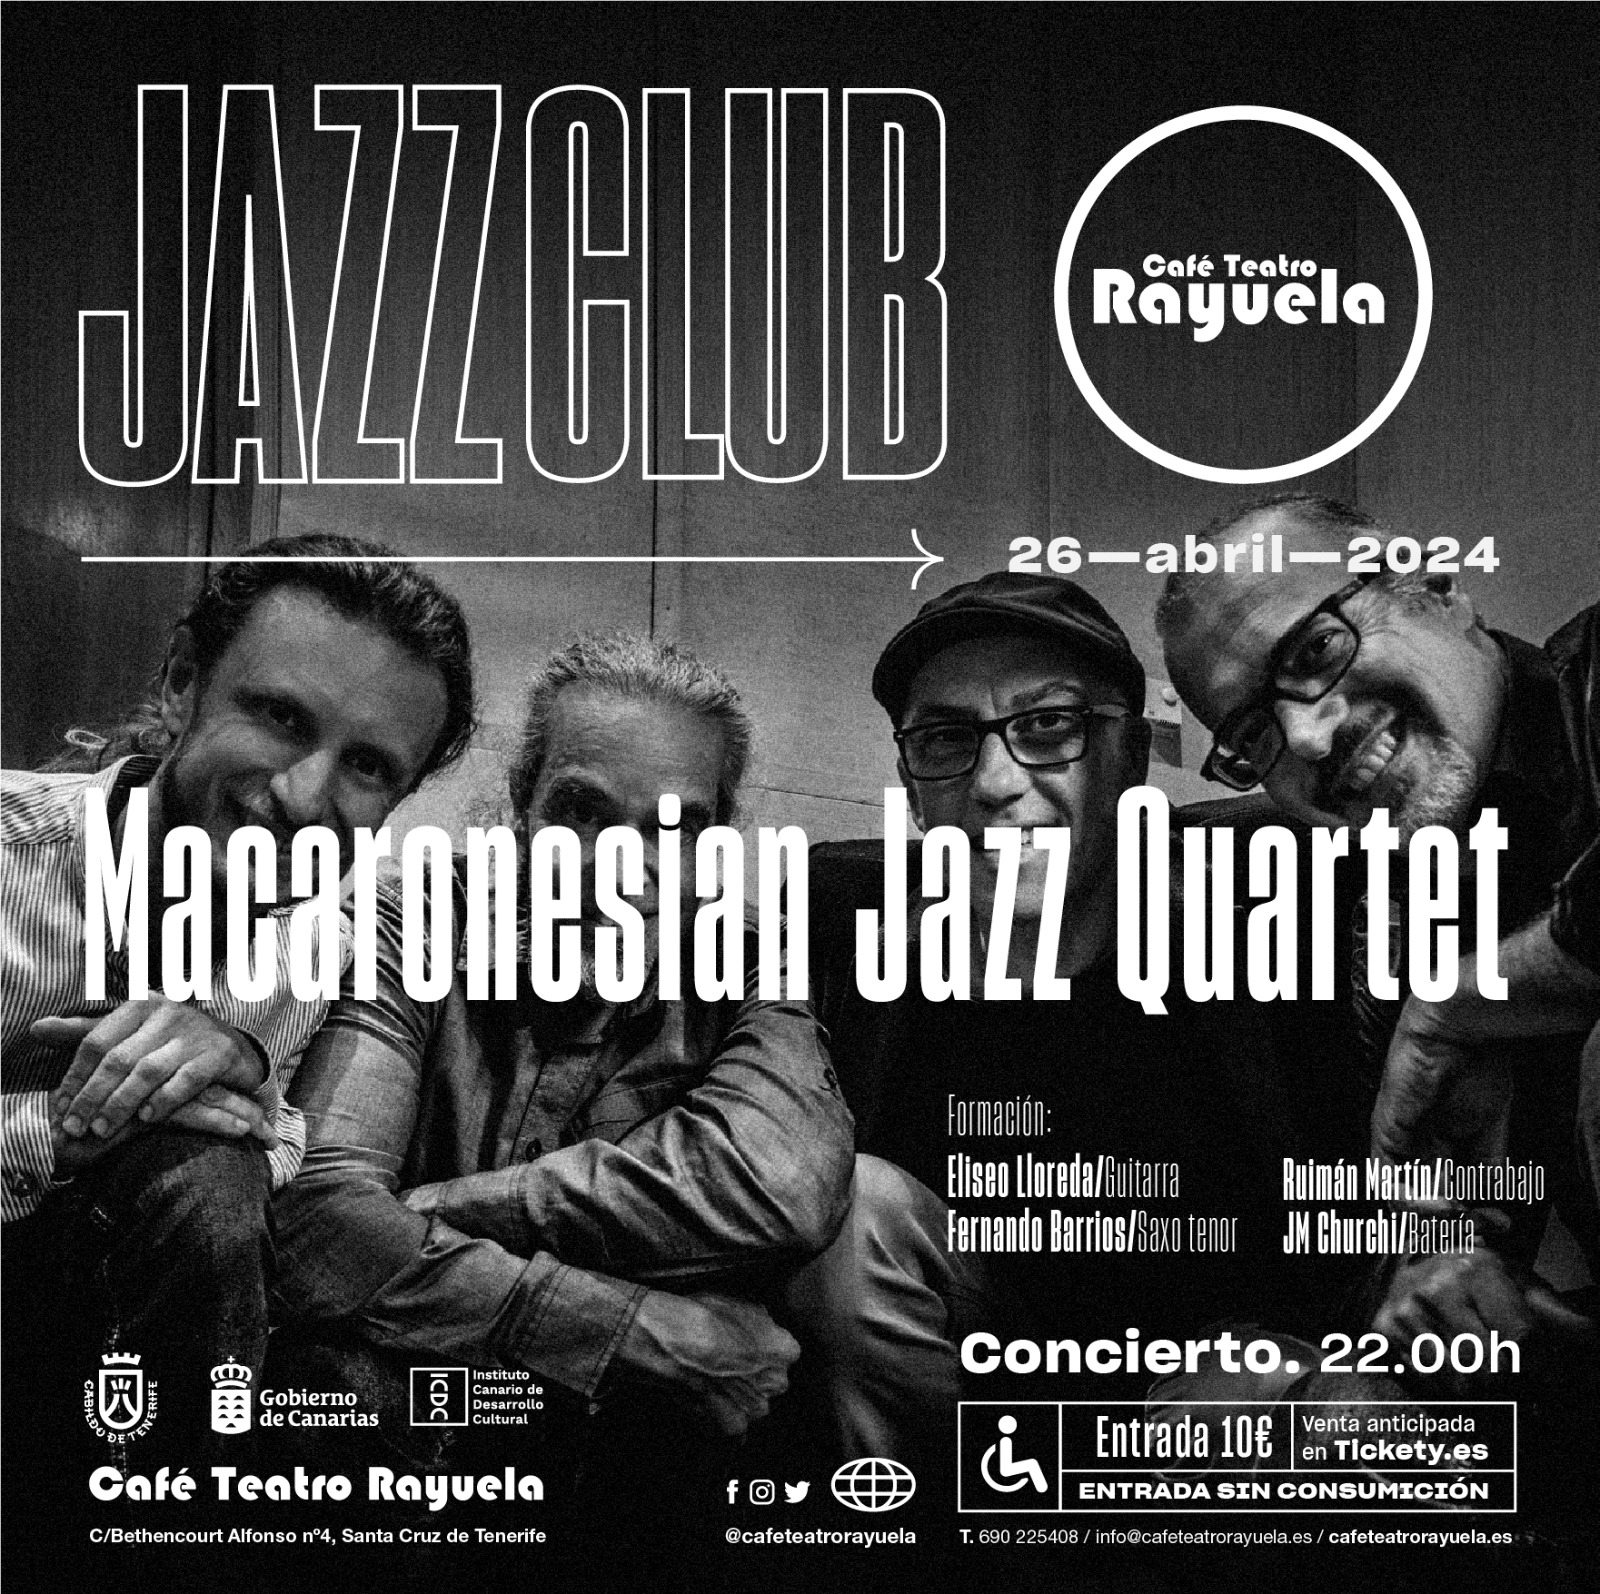 Macaronesian Jazz Quartet